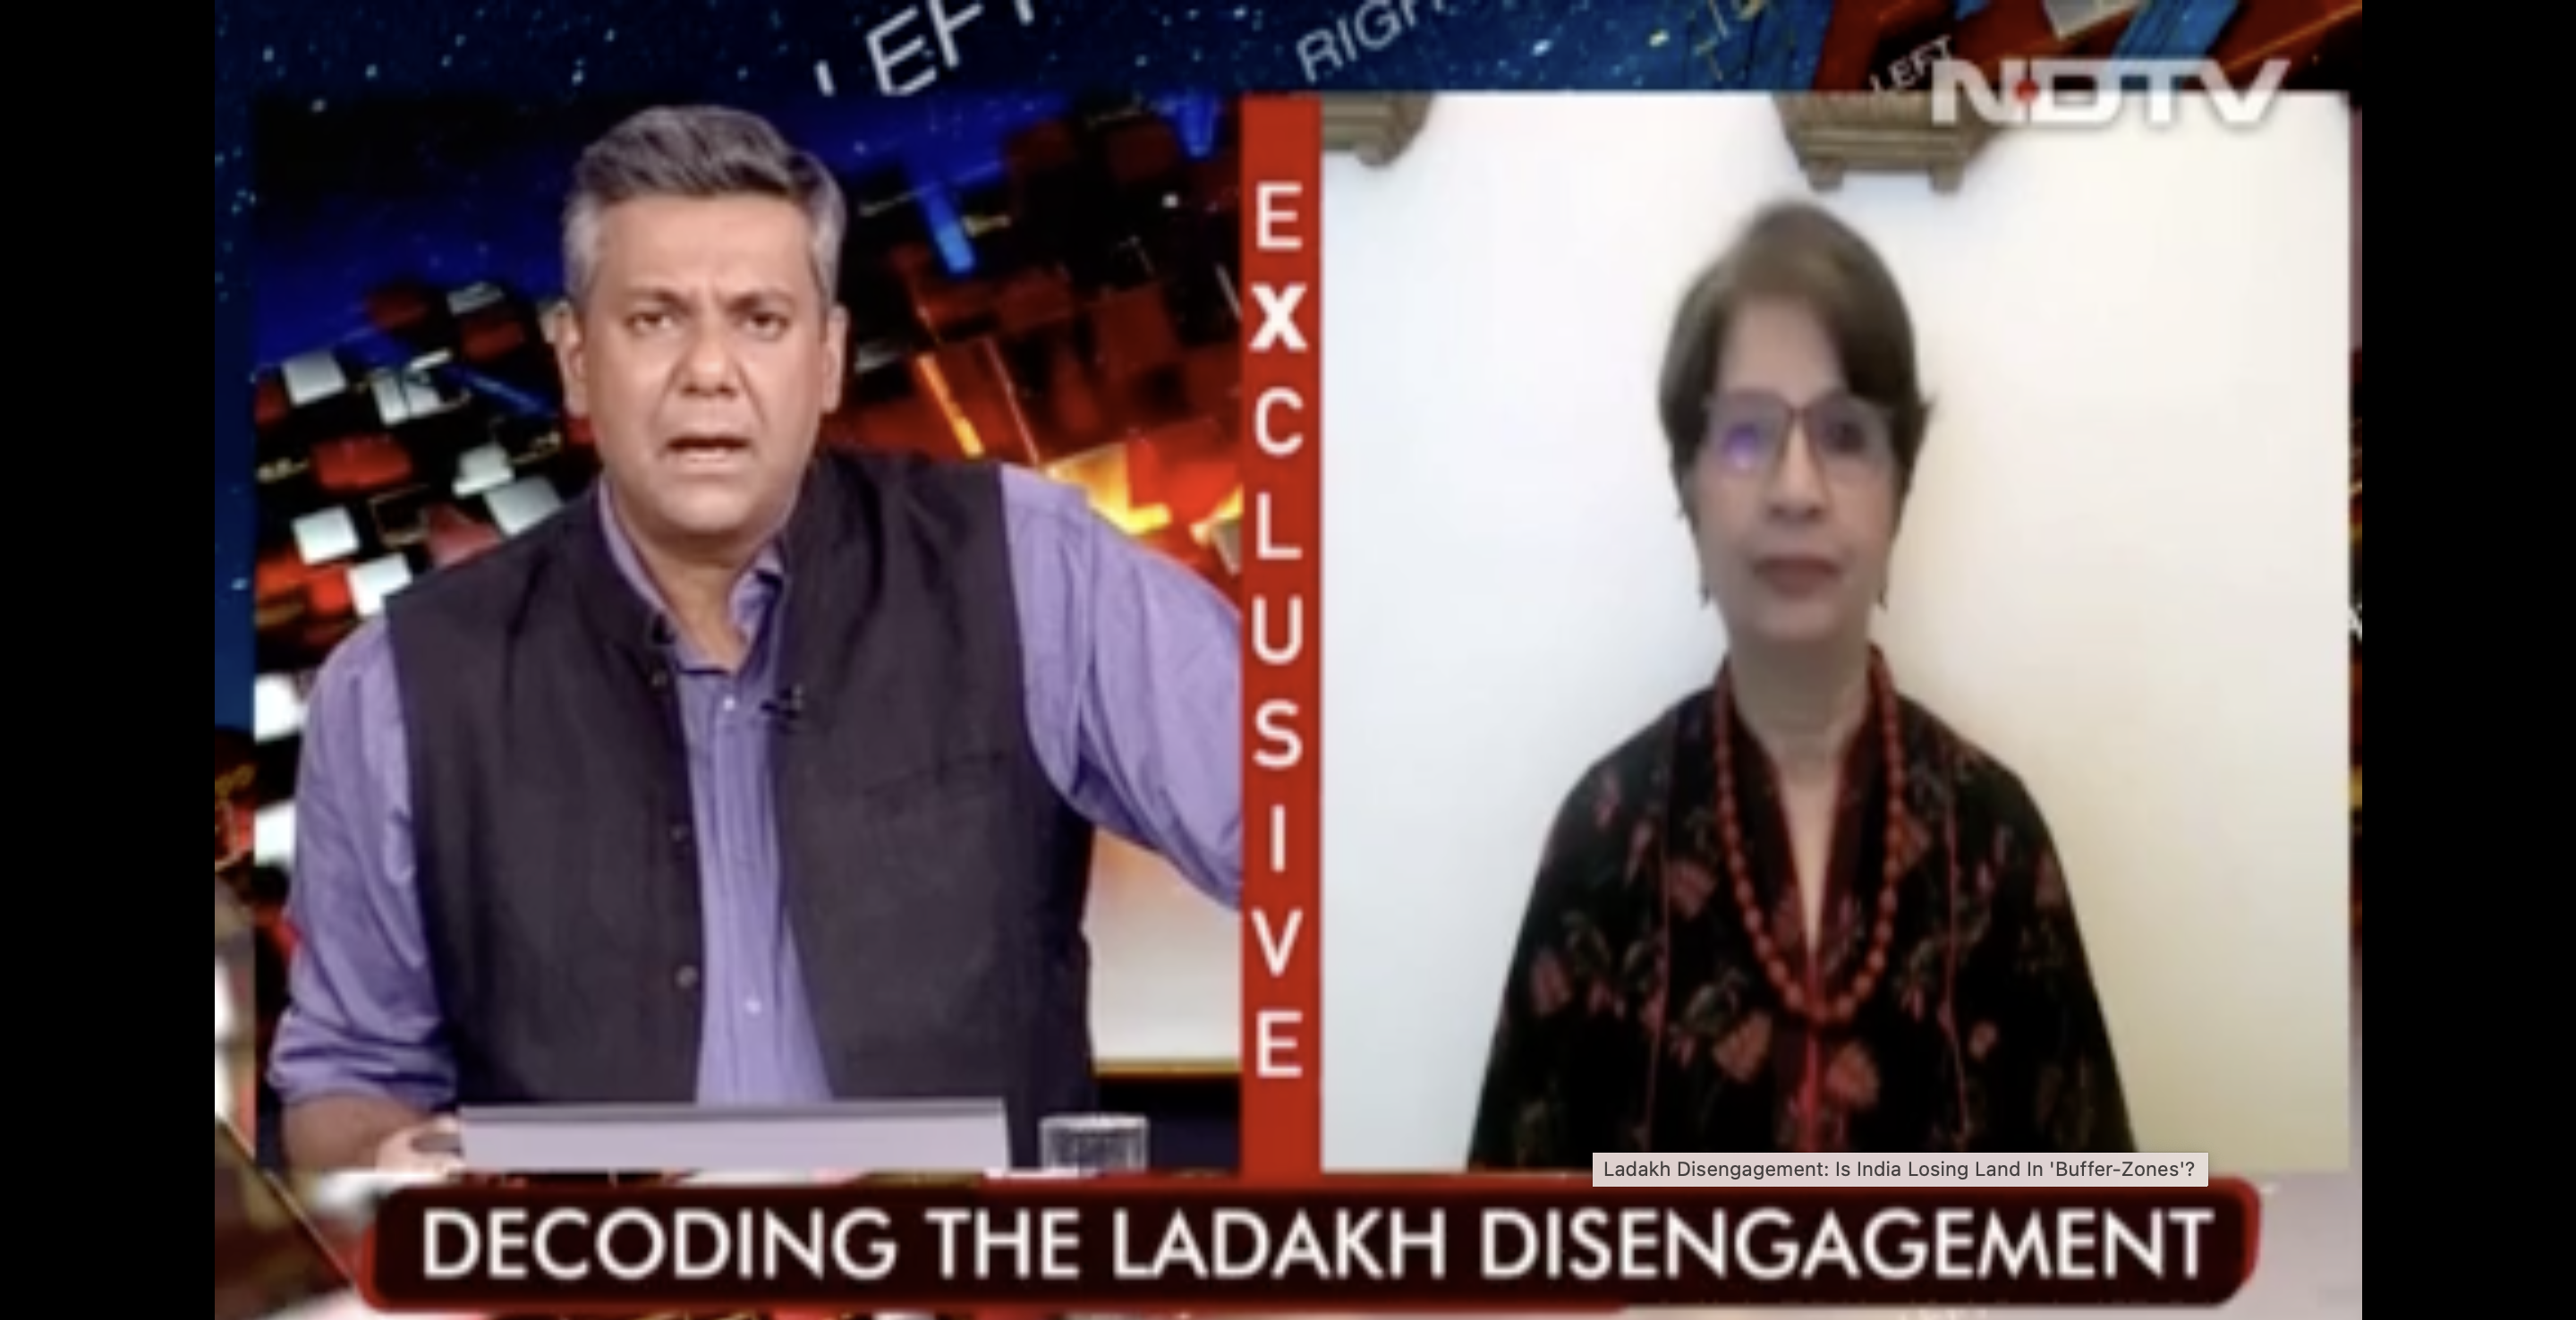 Ladakh Disengagement: Is India Losing Land in 'Buffer-Zones'?